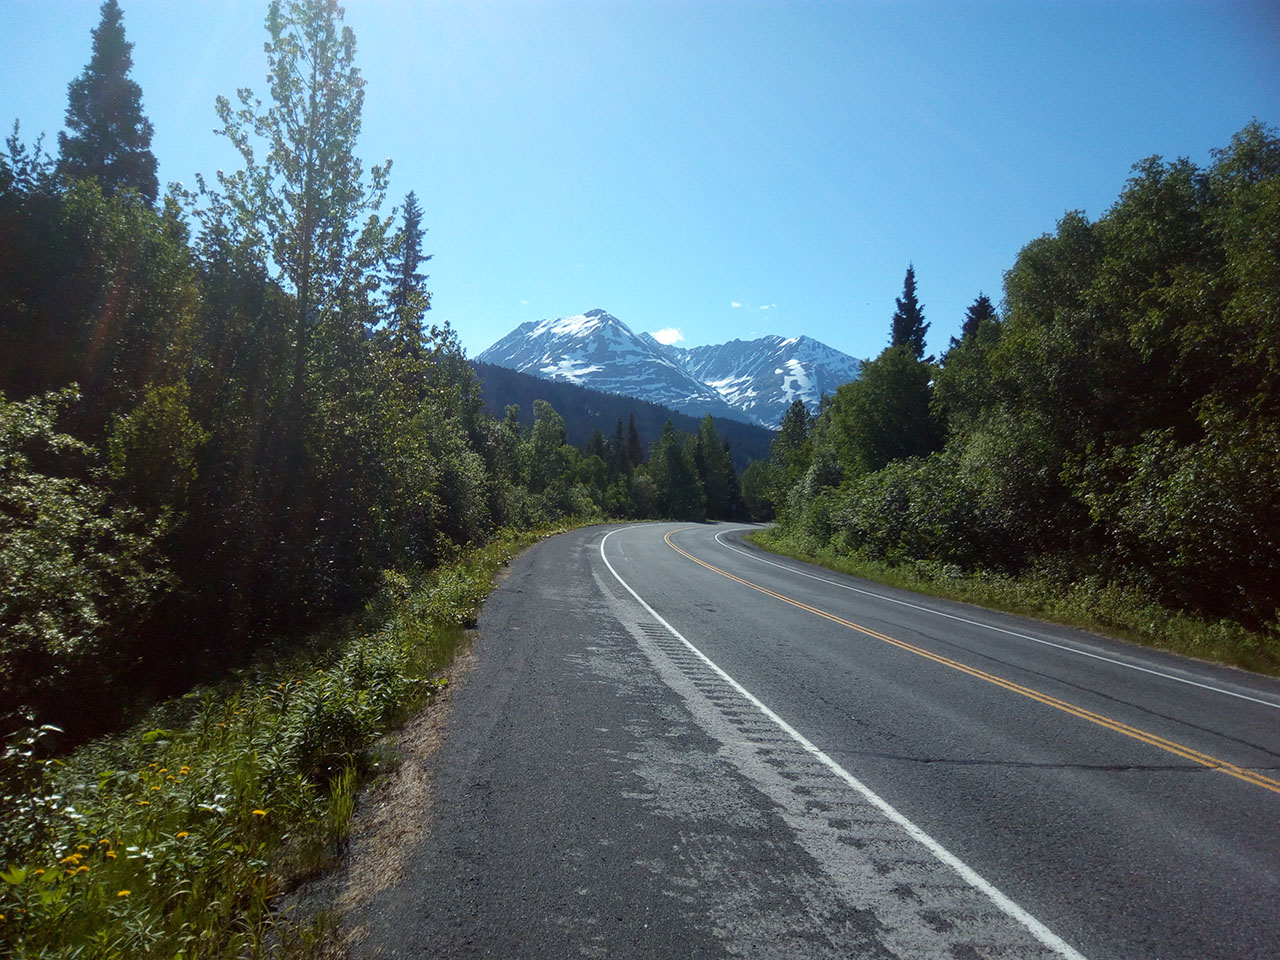 Paved road and Alaska mountains.